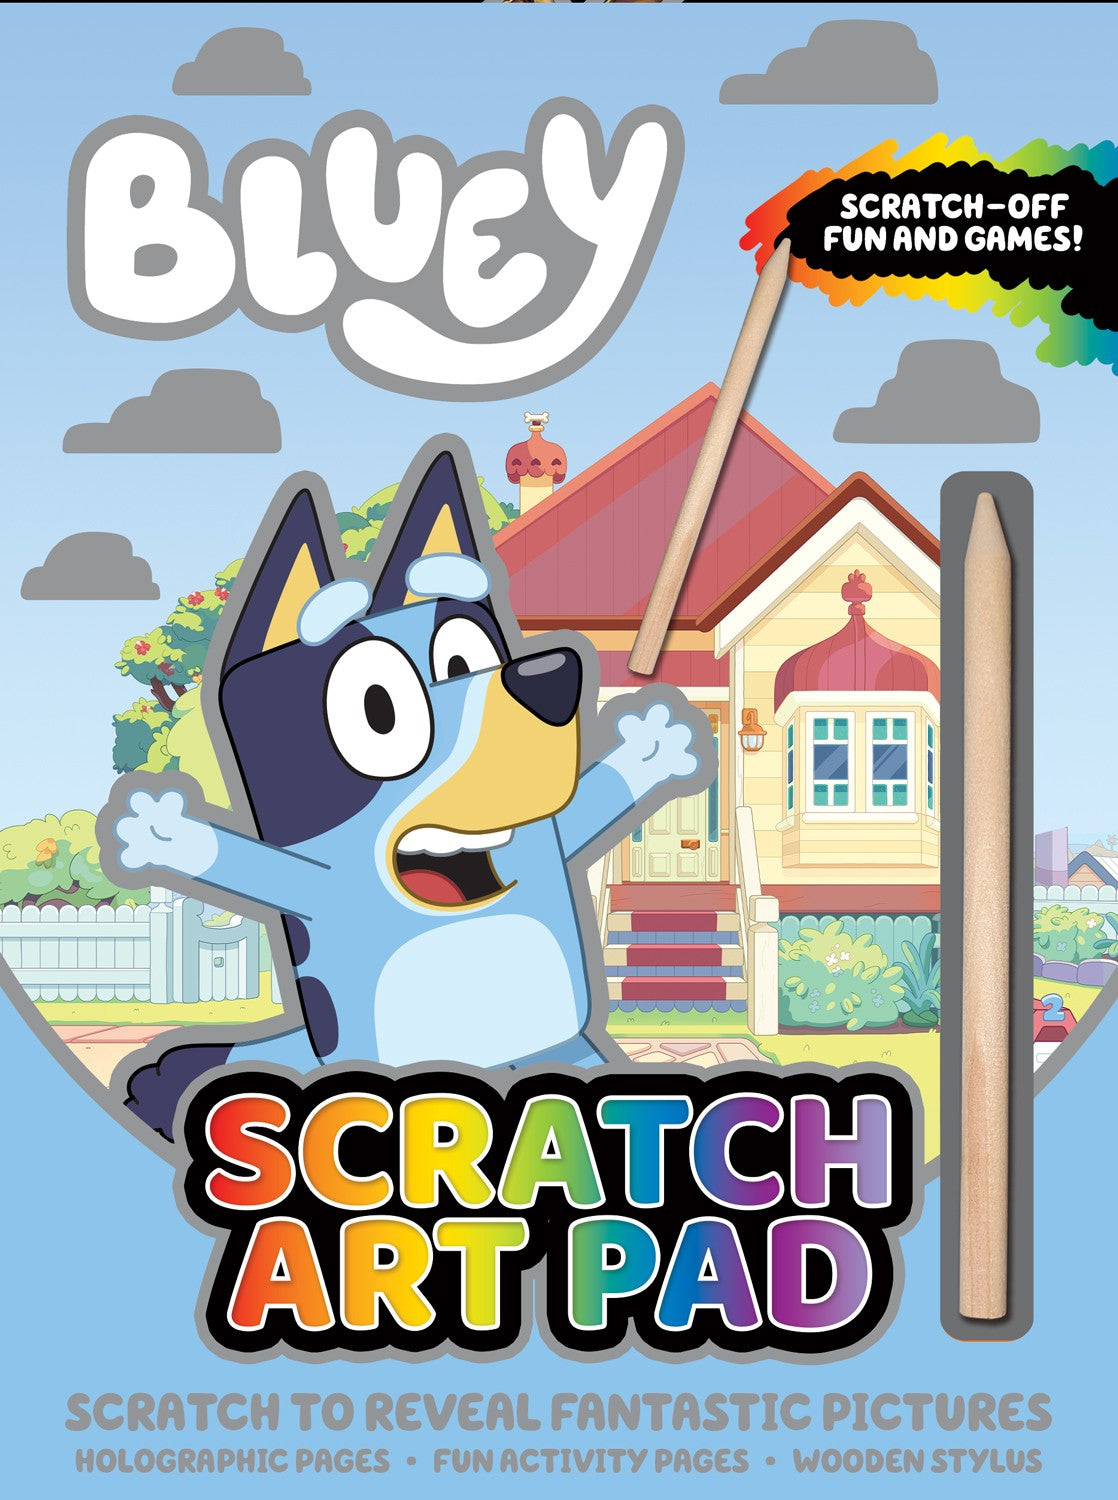 View Bluey Scratch Art Pad information